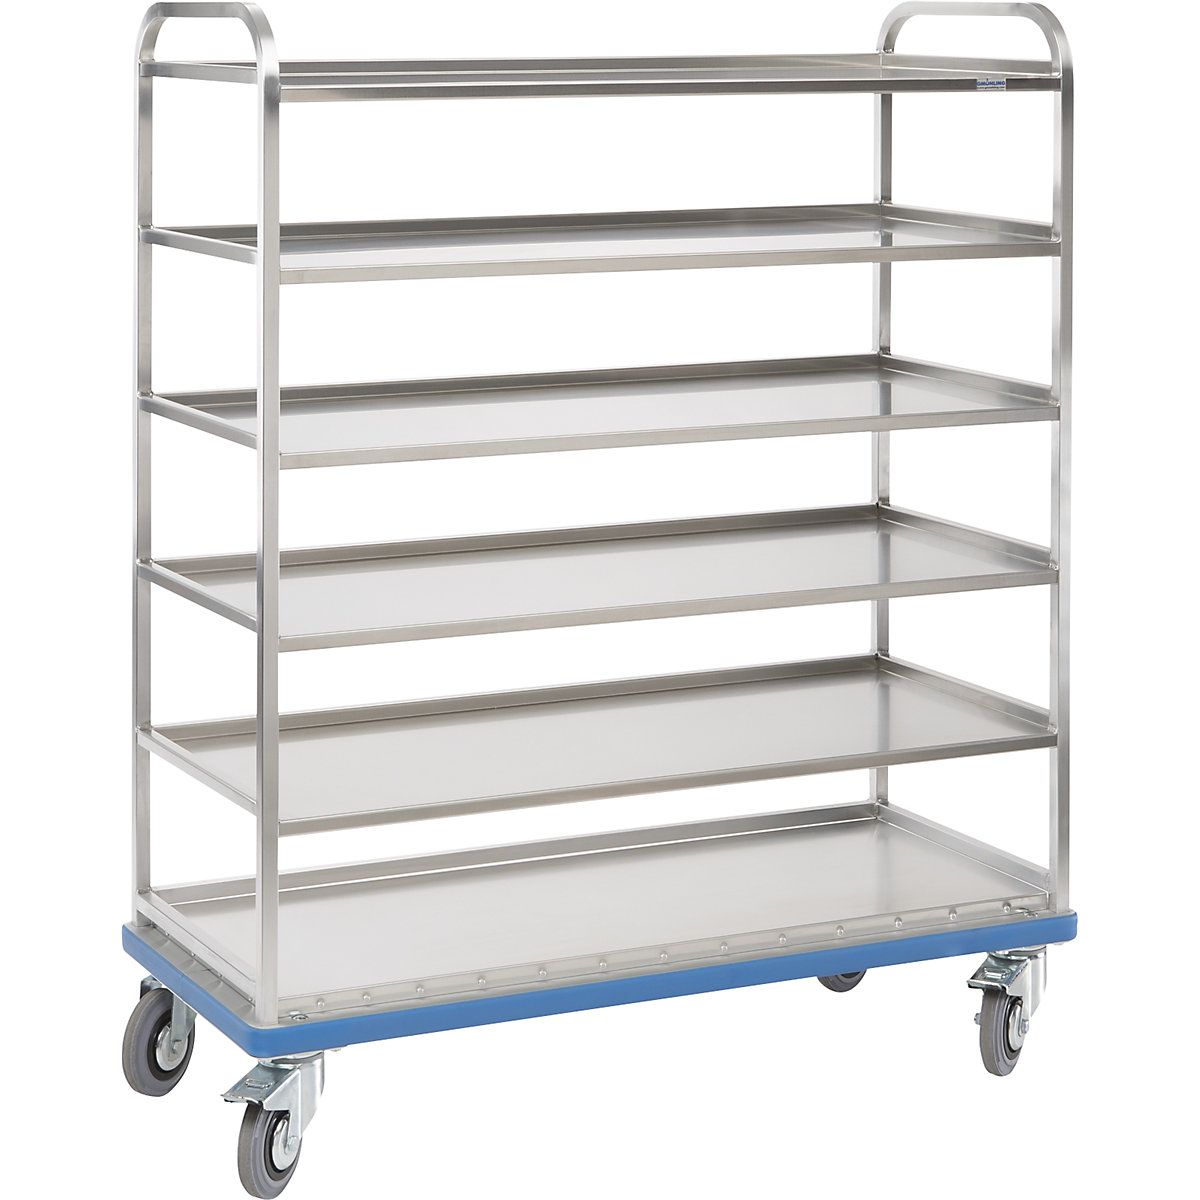 G®-ORG E 2801 shelf trolley – Gmöhling, 6 levels, 5 shelves, LxH 590 x 1420 mm-1